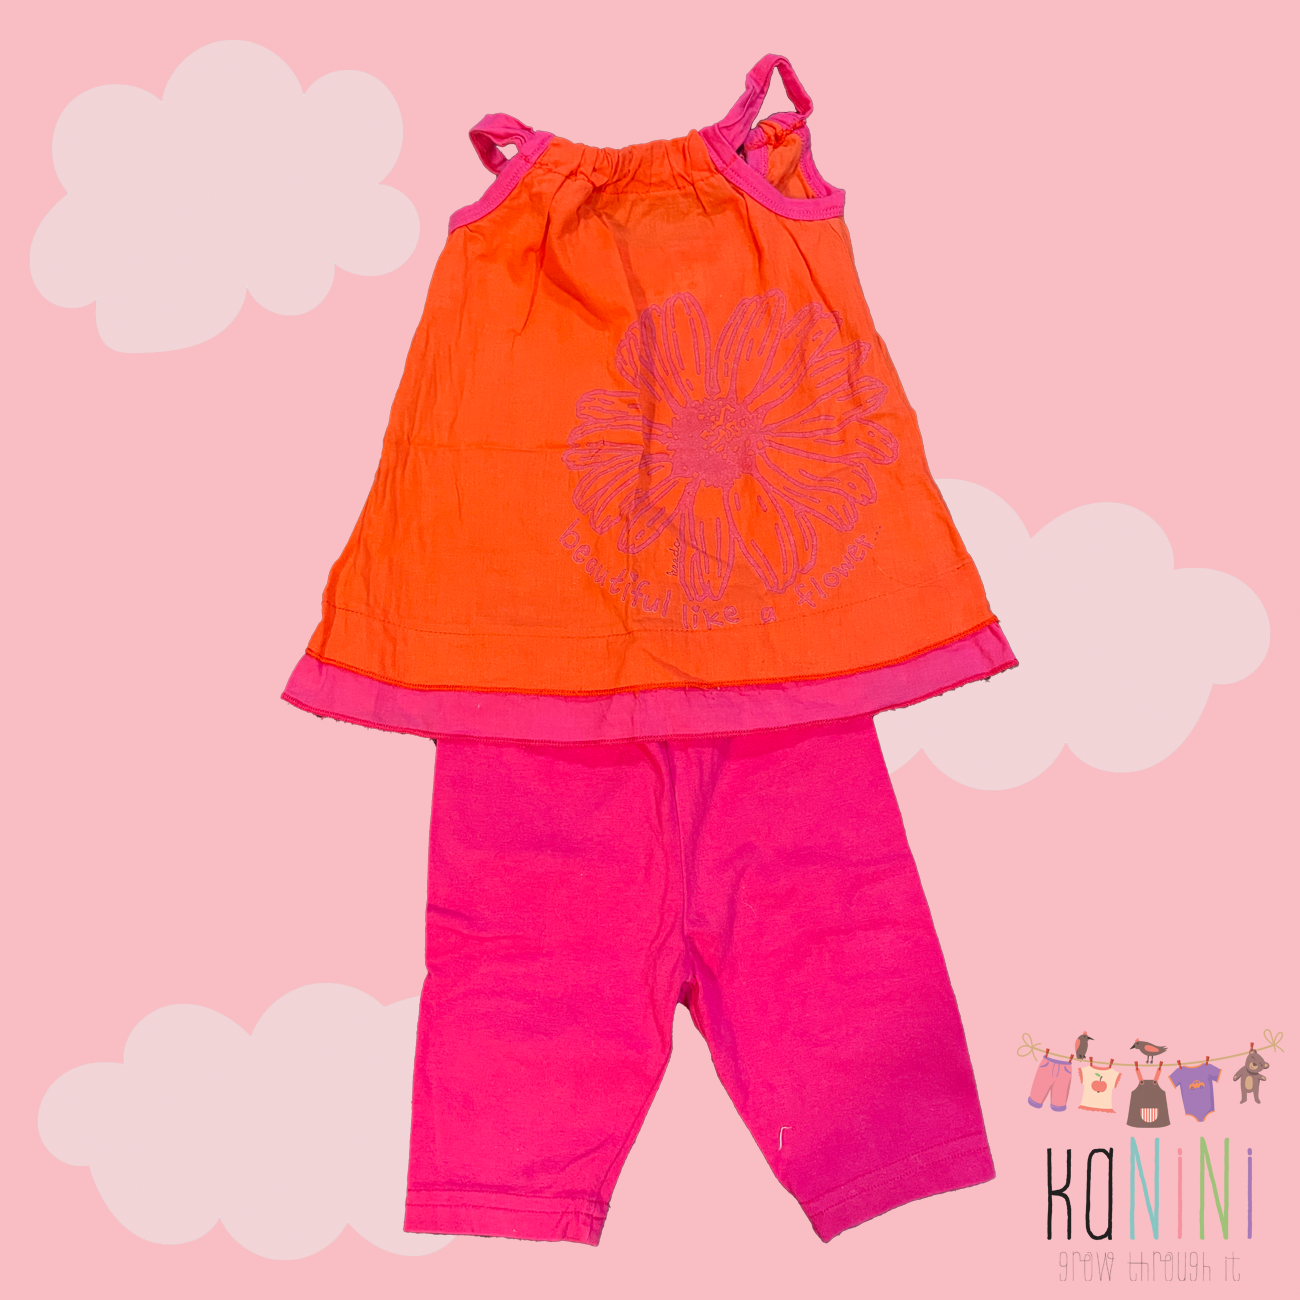 Featured image for “Keedo 6 - 12 Months Girls Pink & Orange Set”